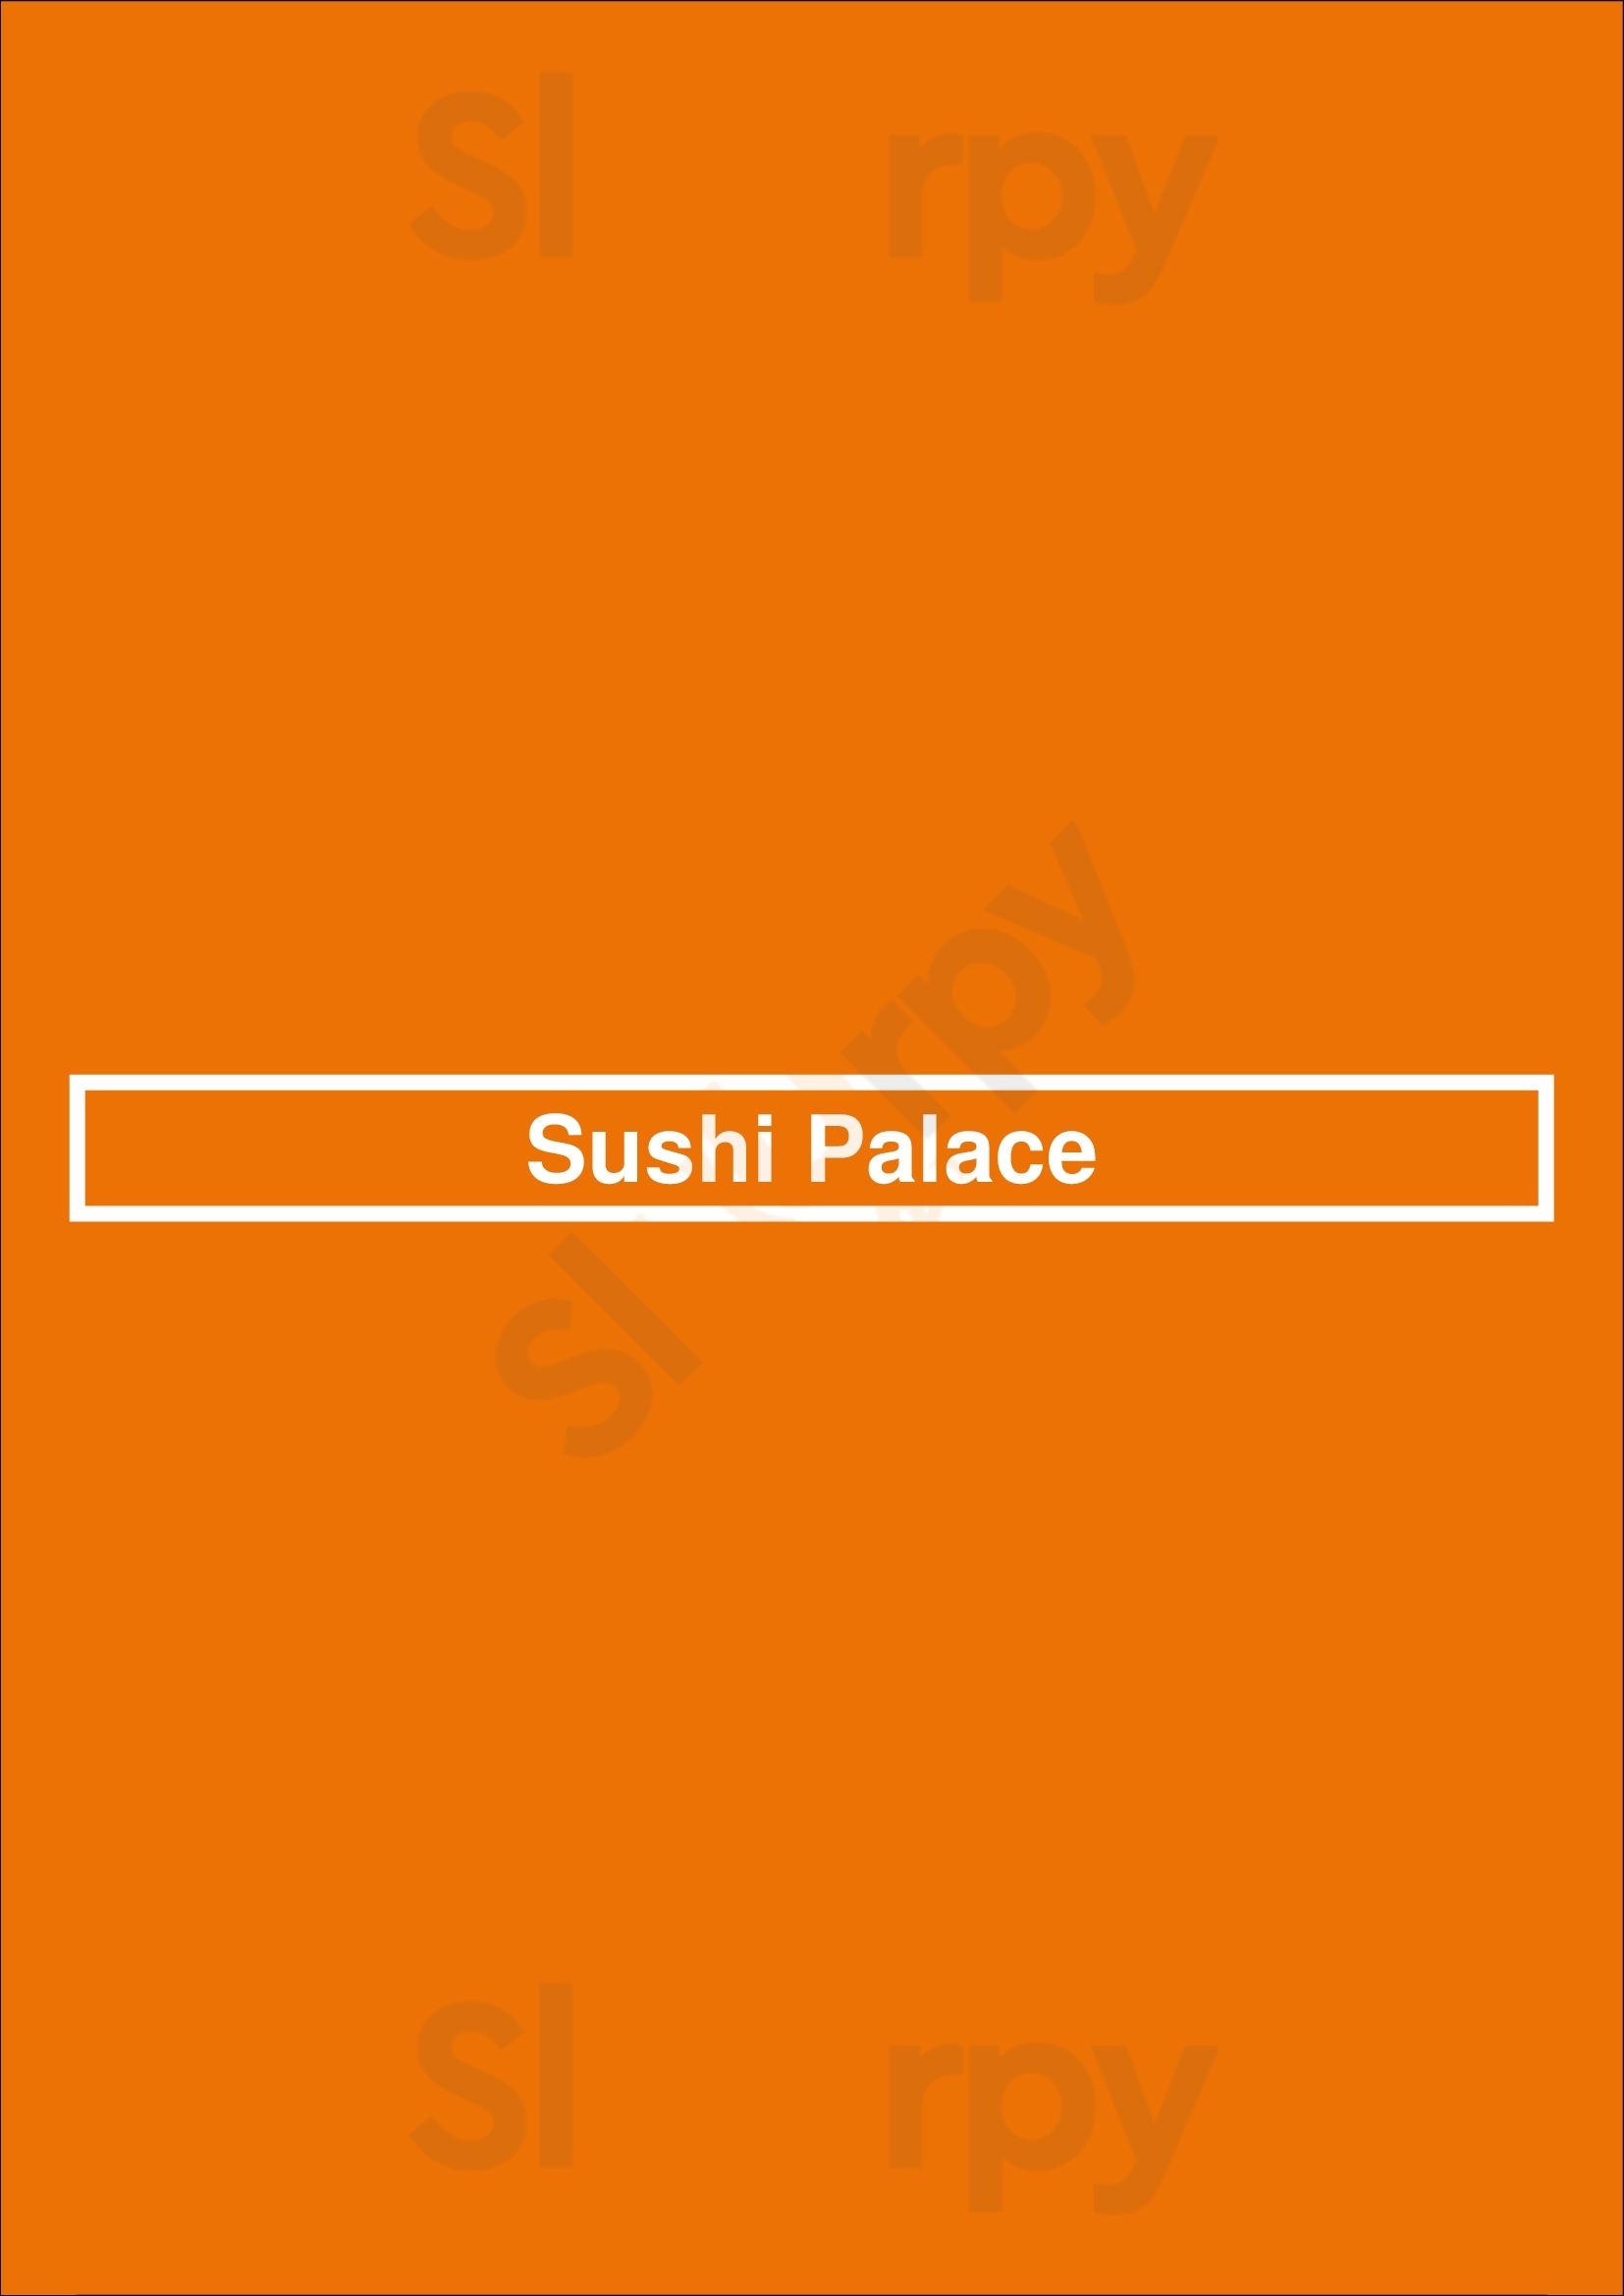 Sushi Palace Montreal Menu - 1